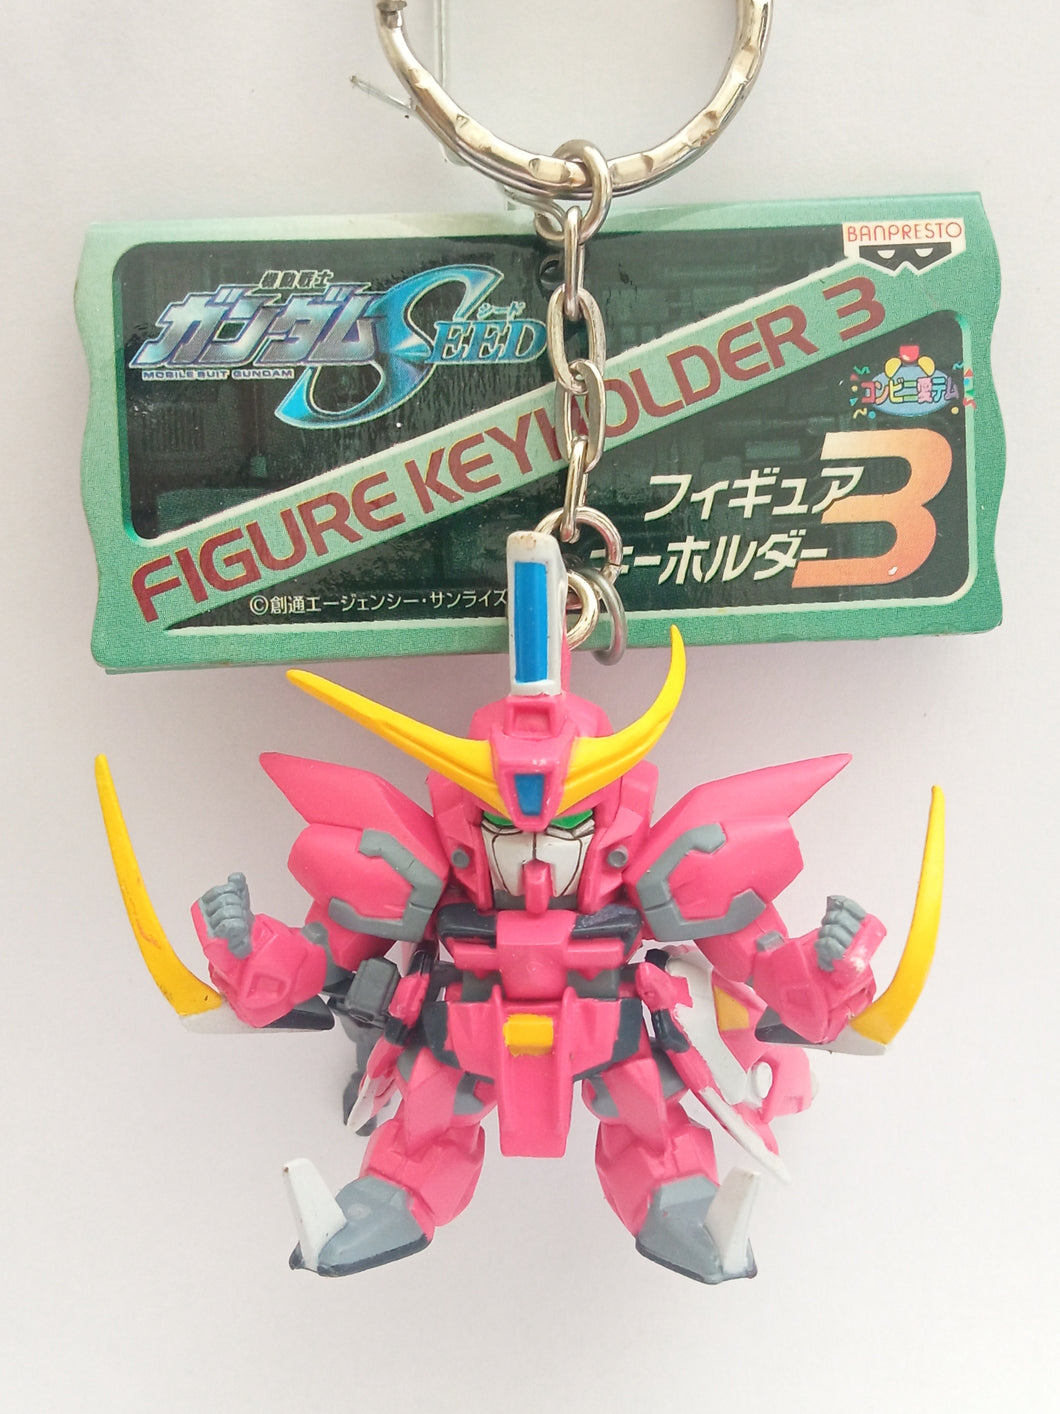 Mobile Suit Gundam Seed Figure Keychain Mascot Key Holder Strap